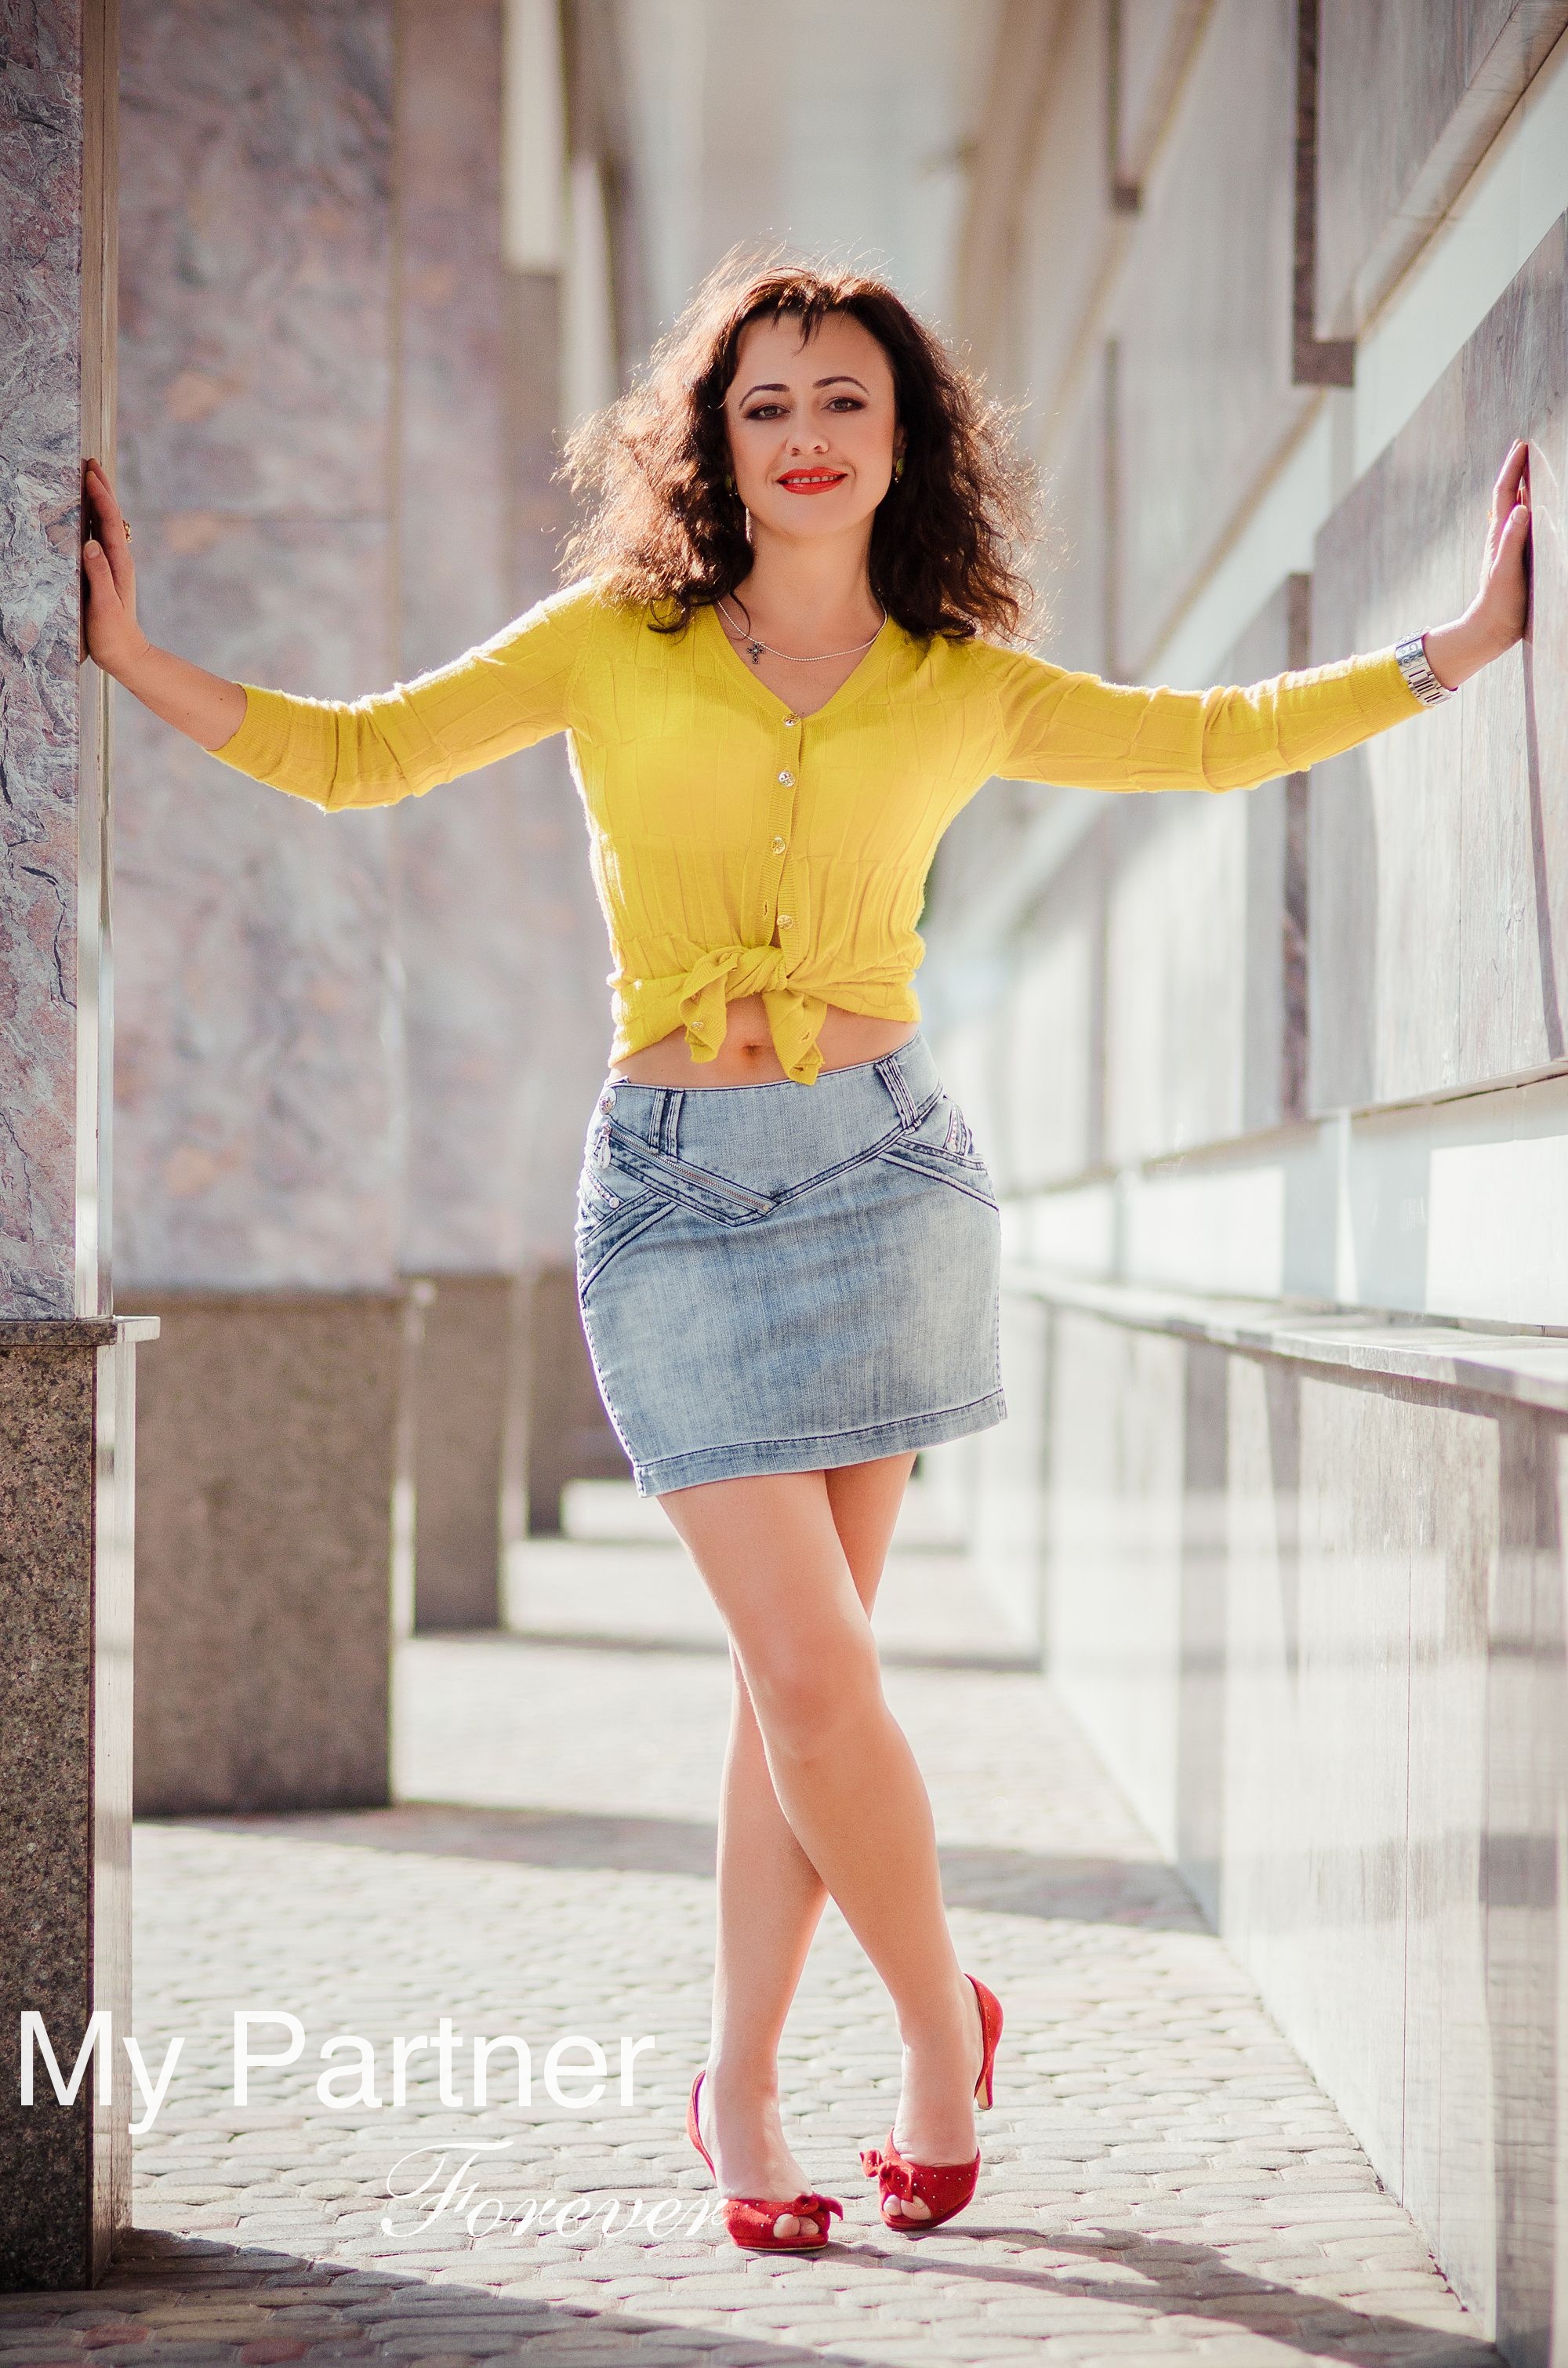 Dating Site To Meet Single Ukrainian Girl Vita From Poltava Ukraine